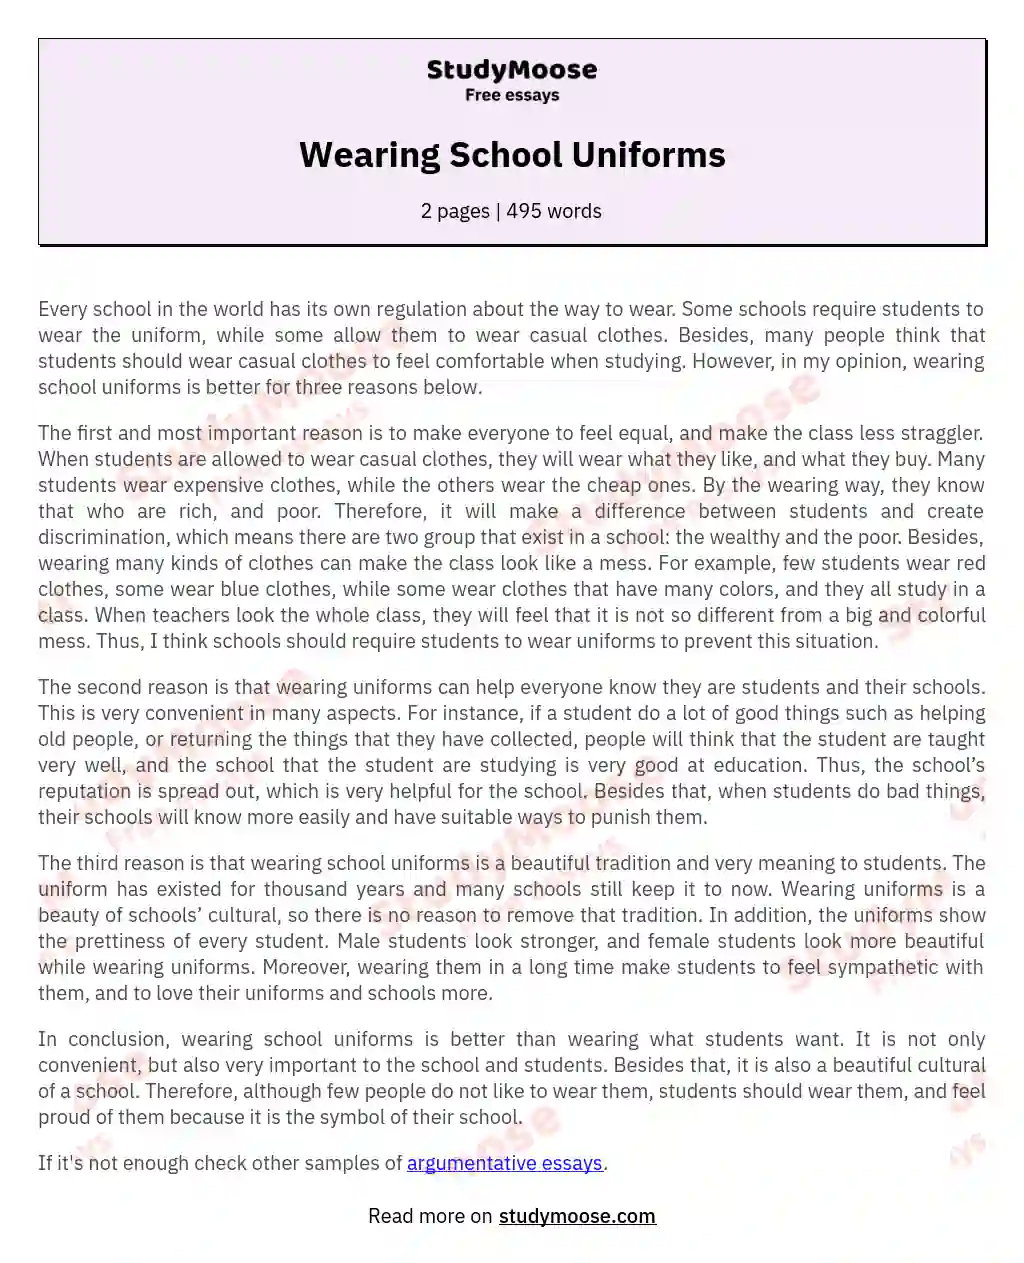 Wearing School Uniforms essay